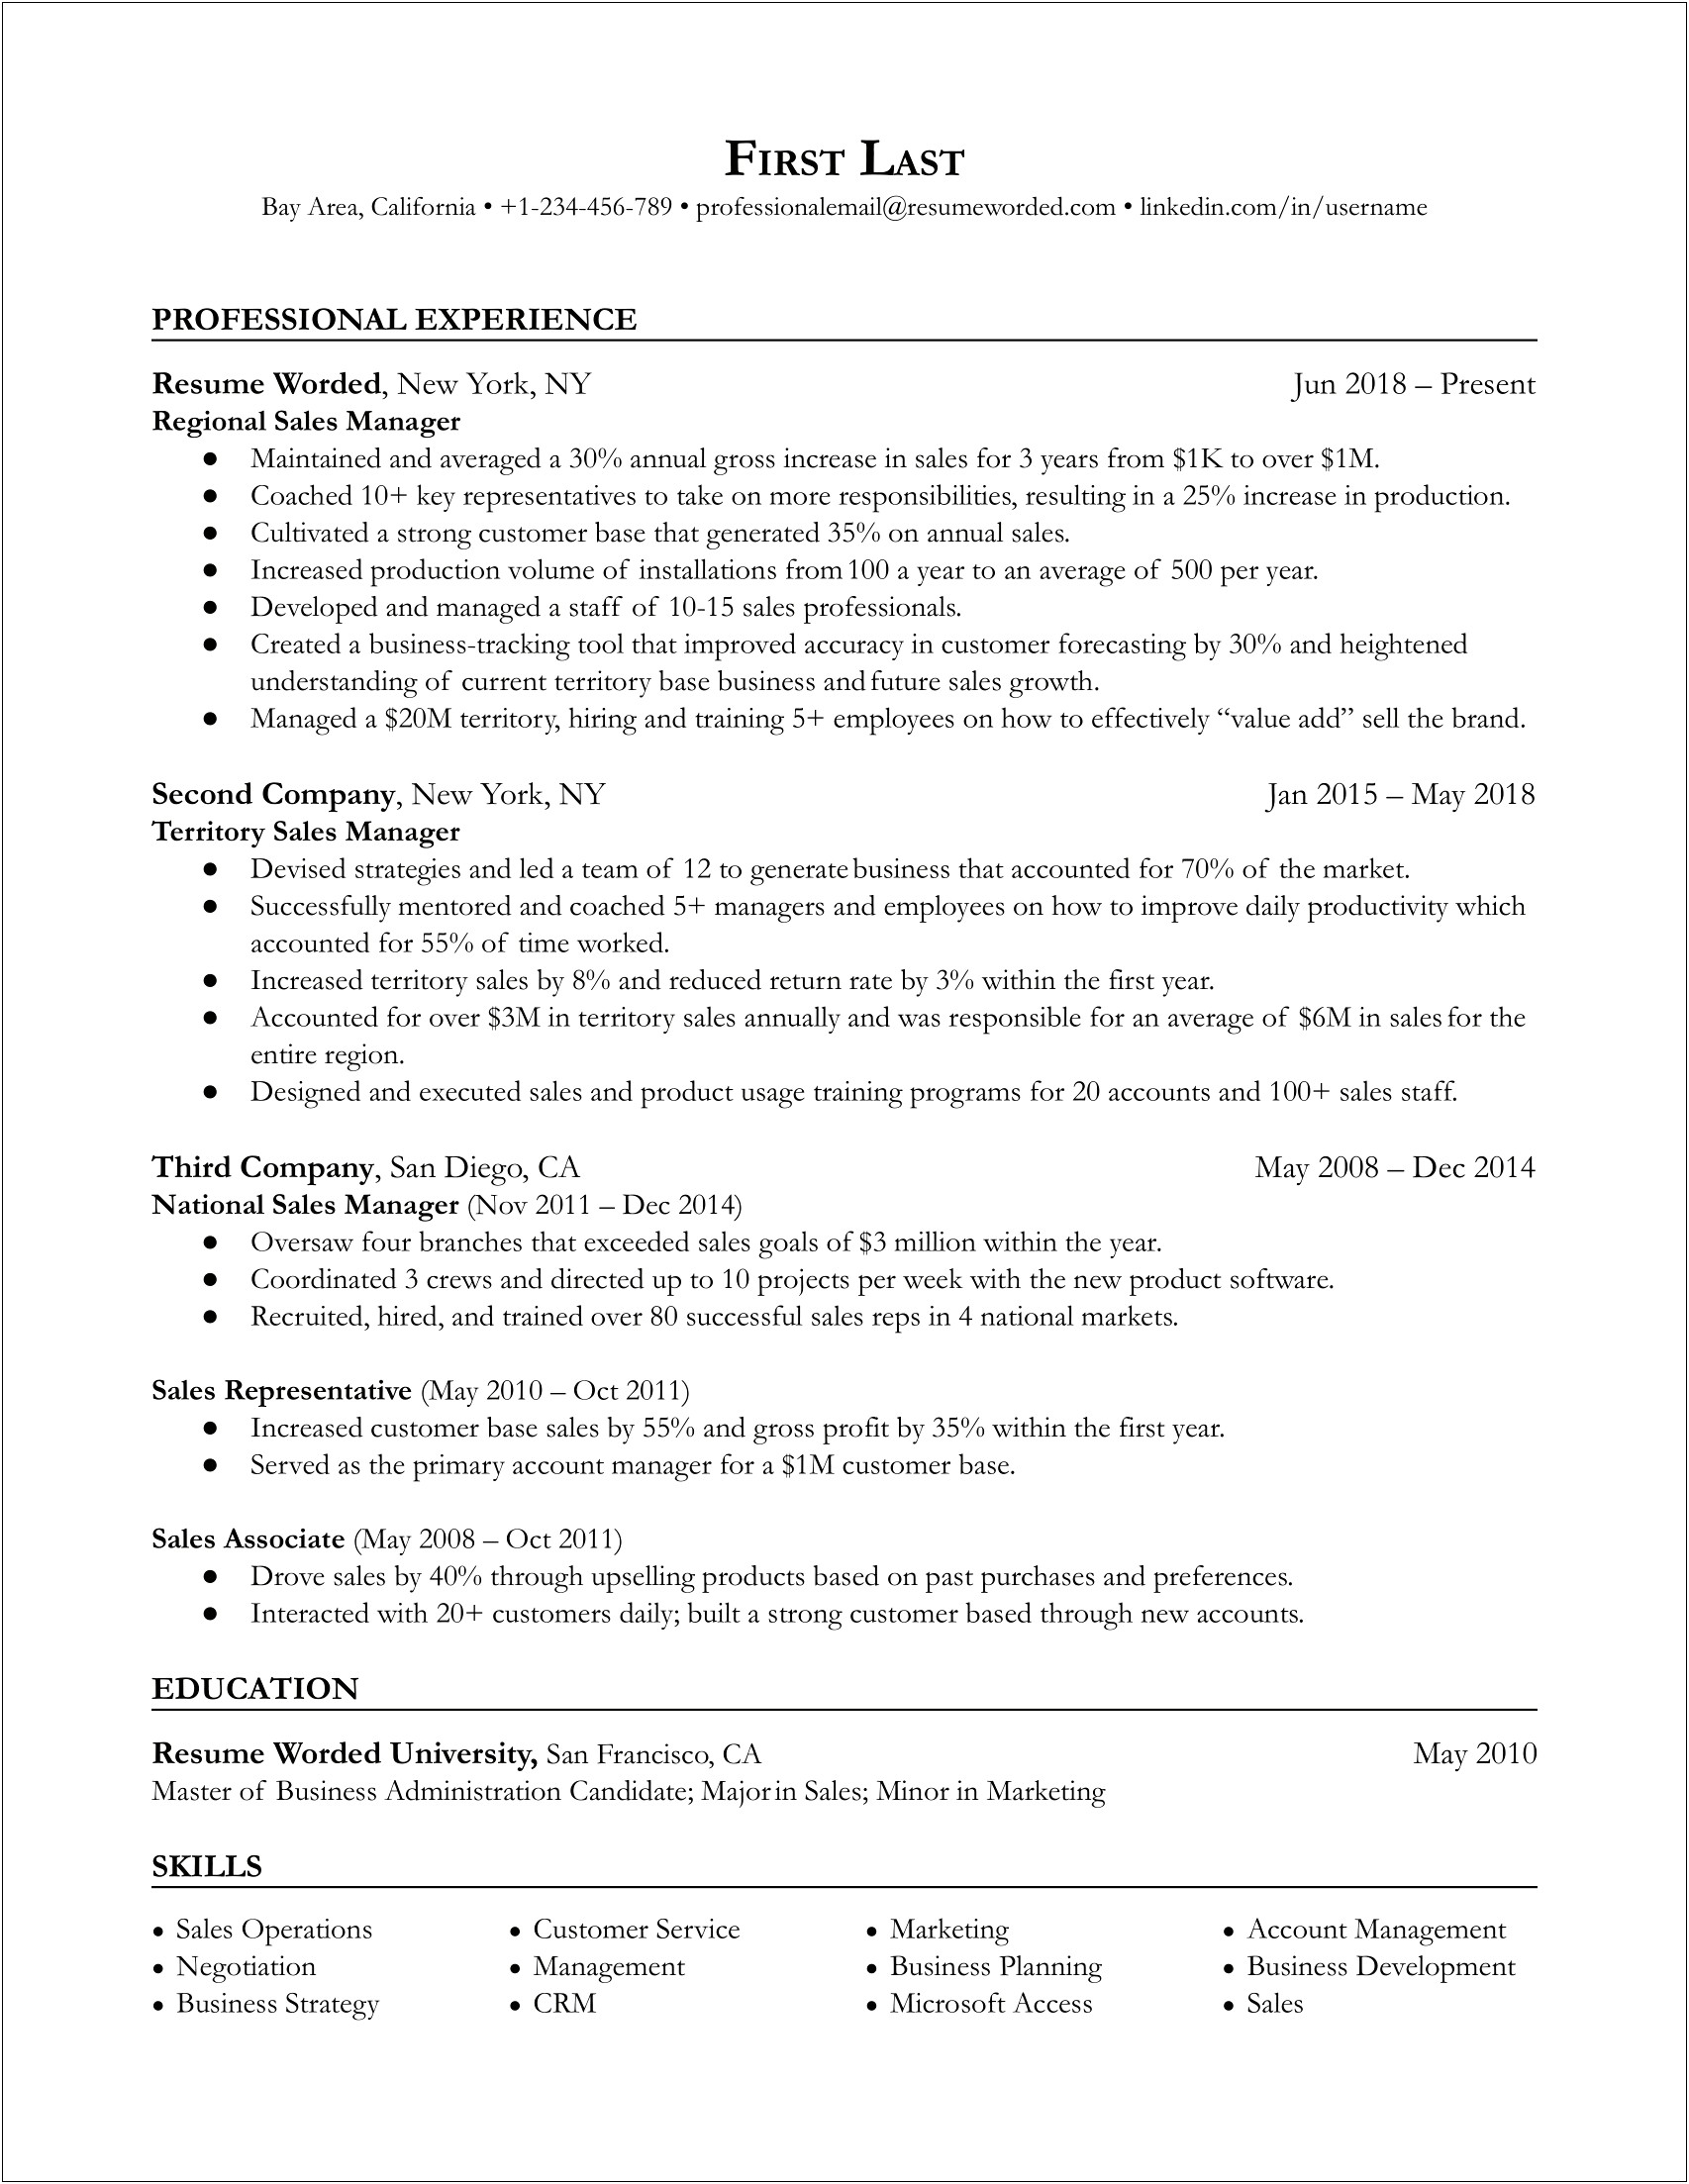 Sample Resume For Senior Sales Professional